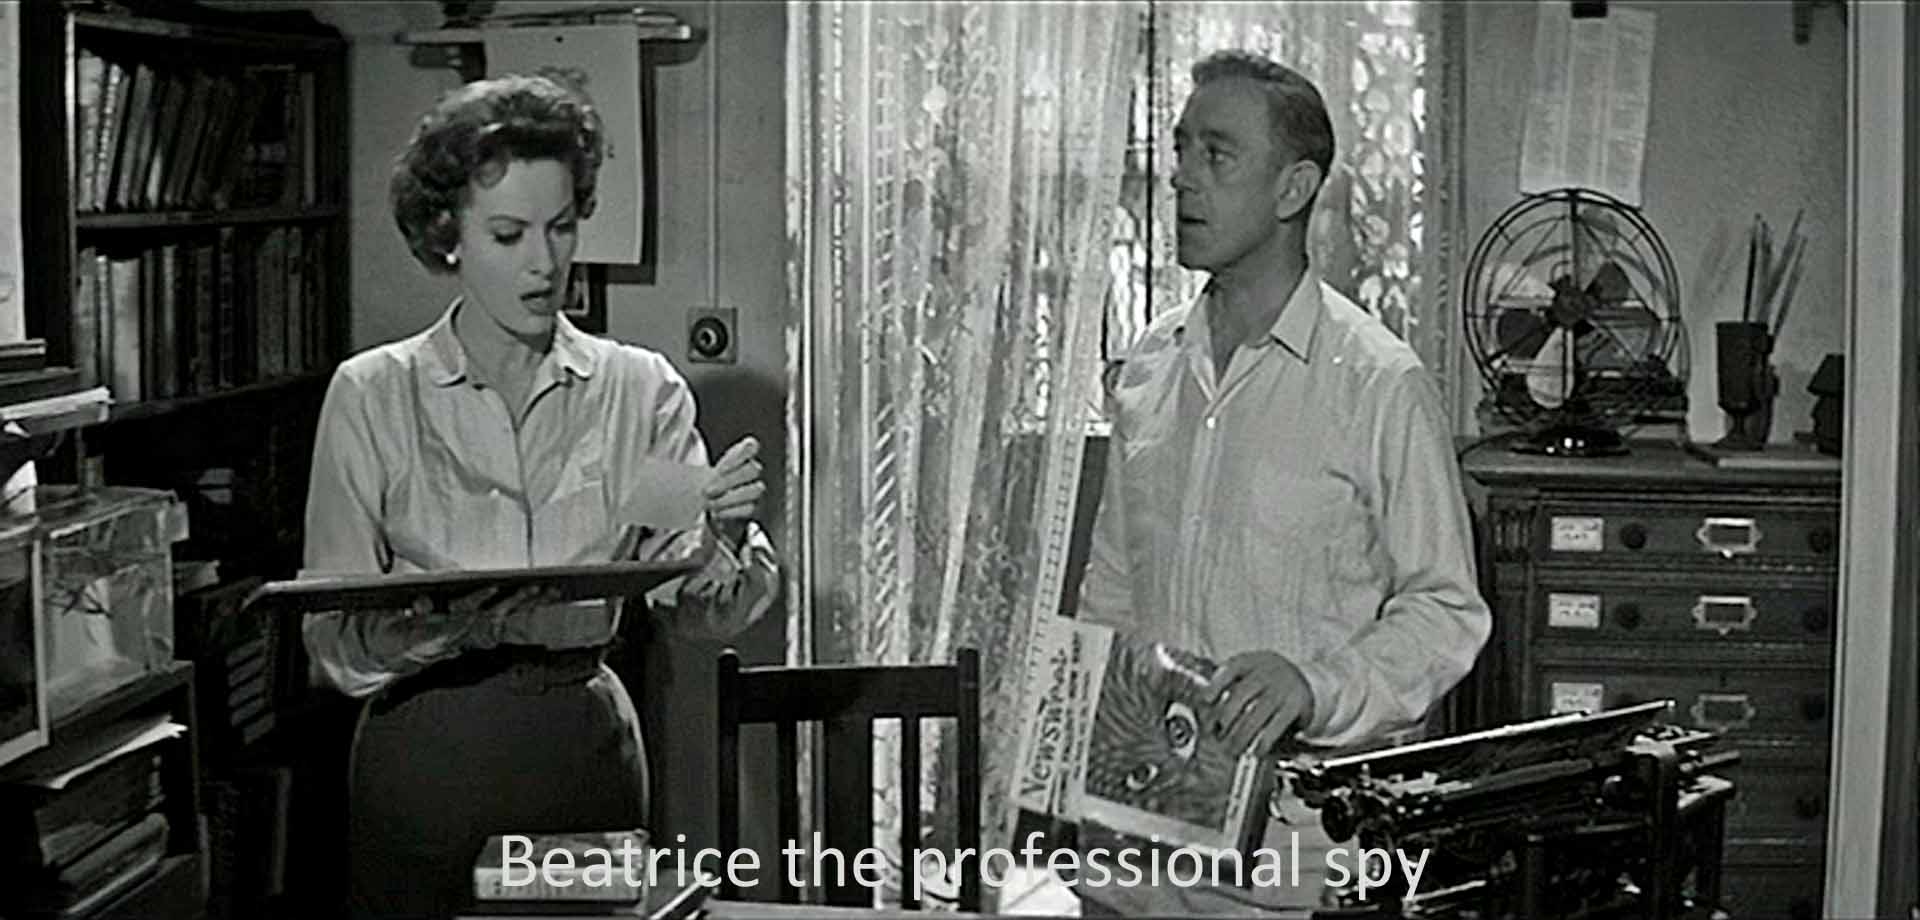 Beatrice the professional spy